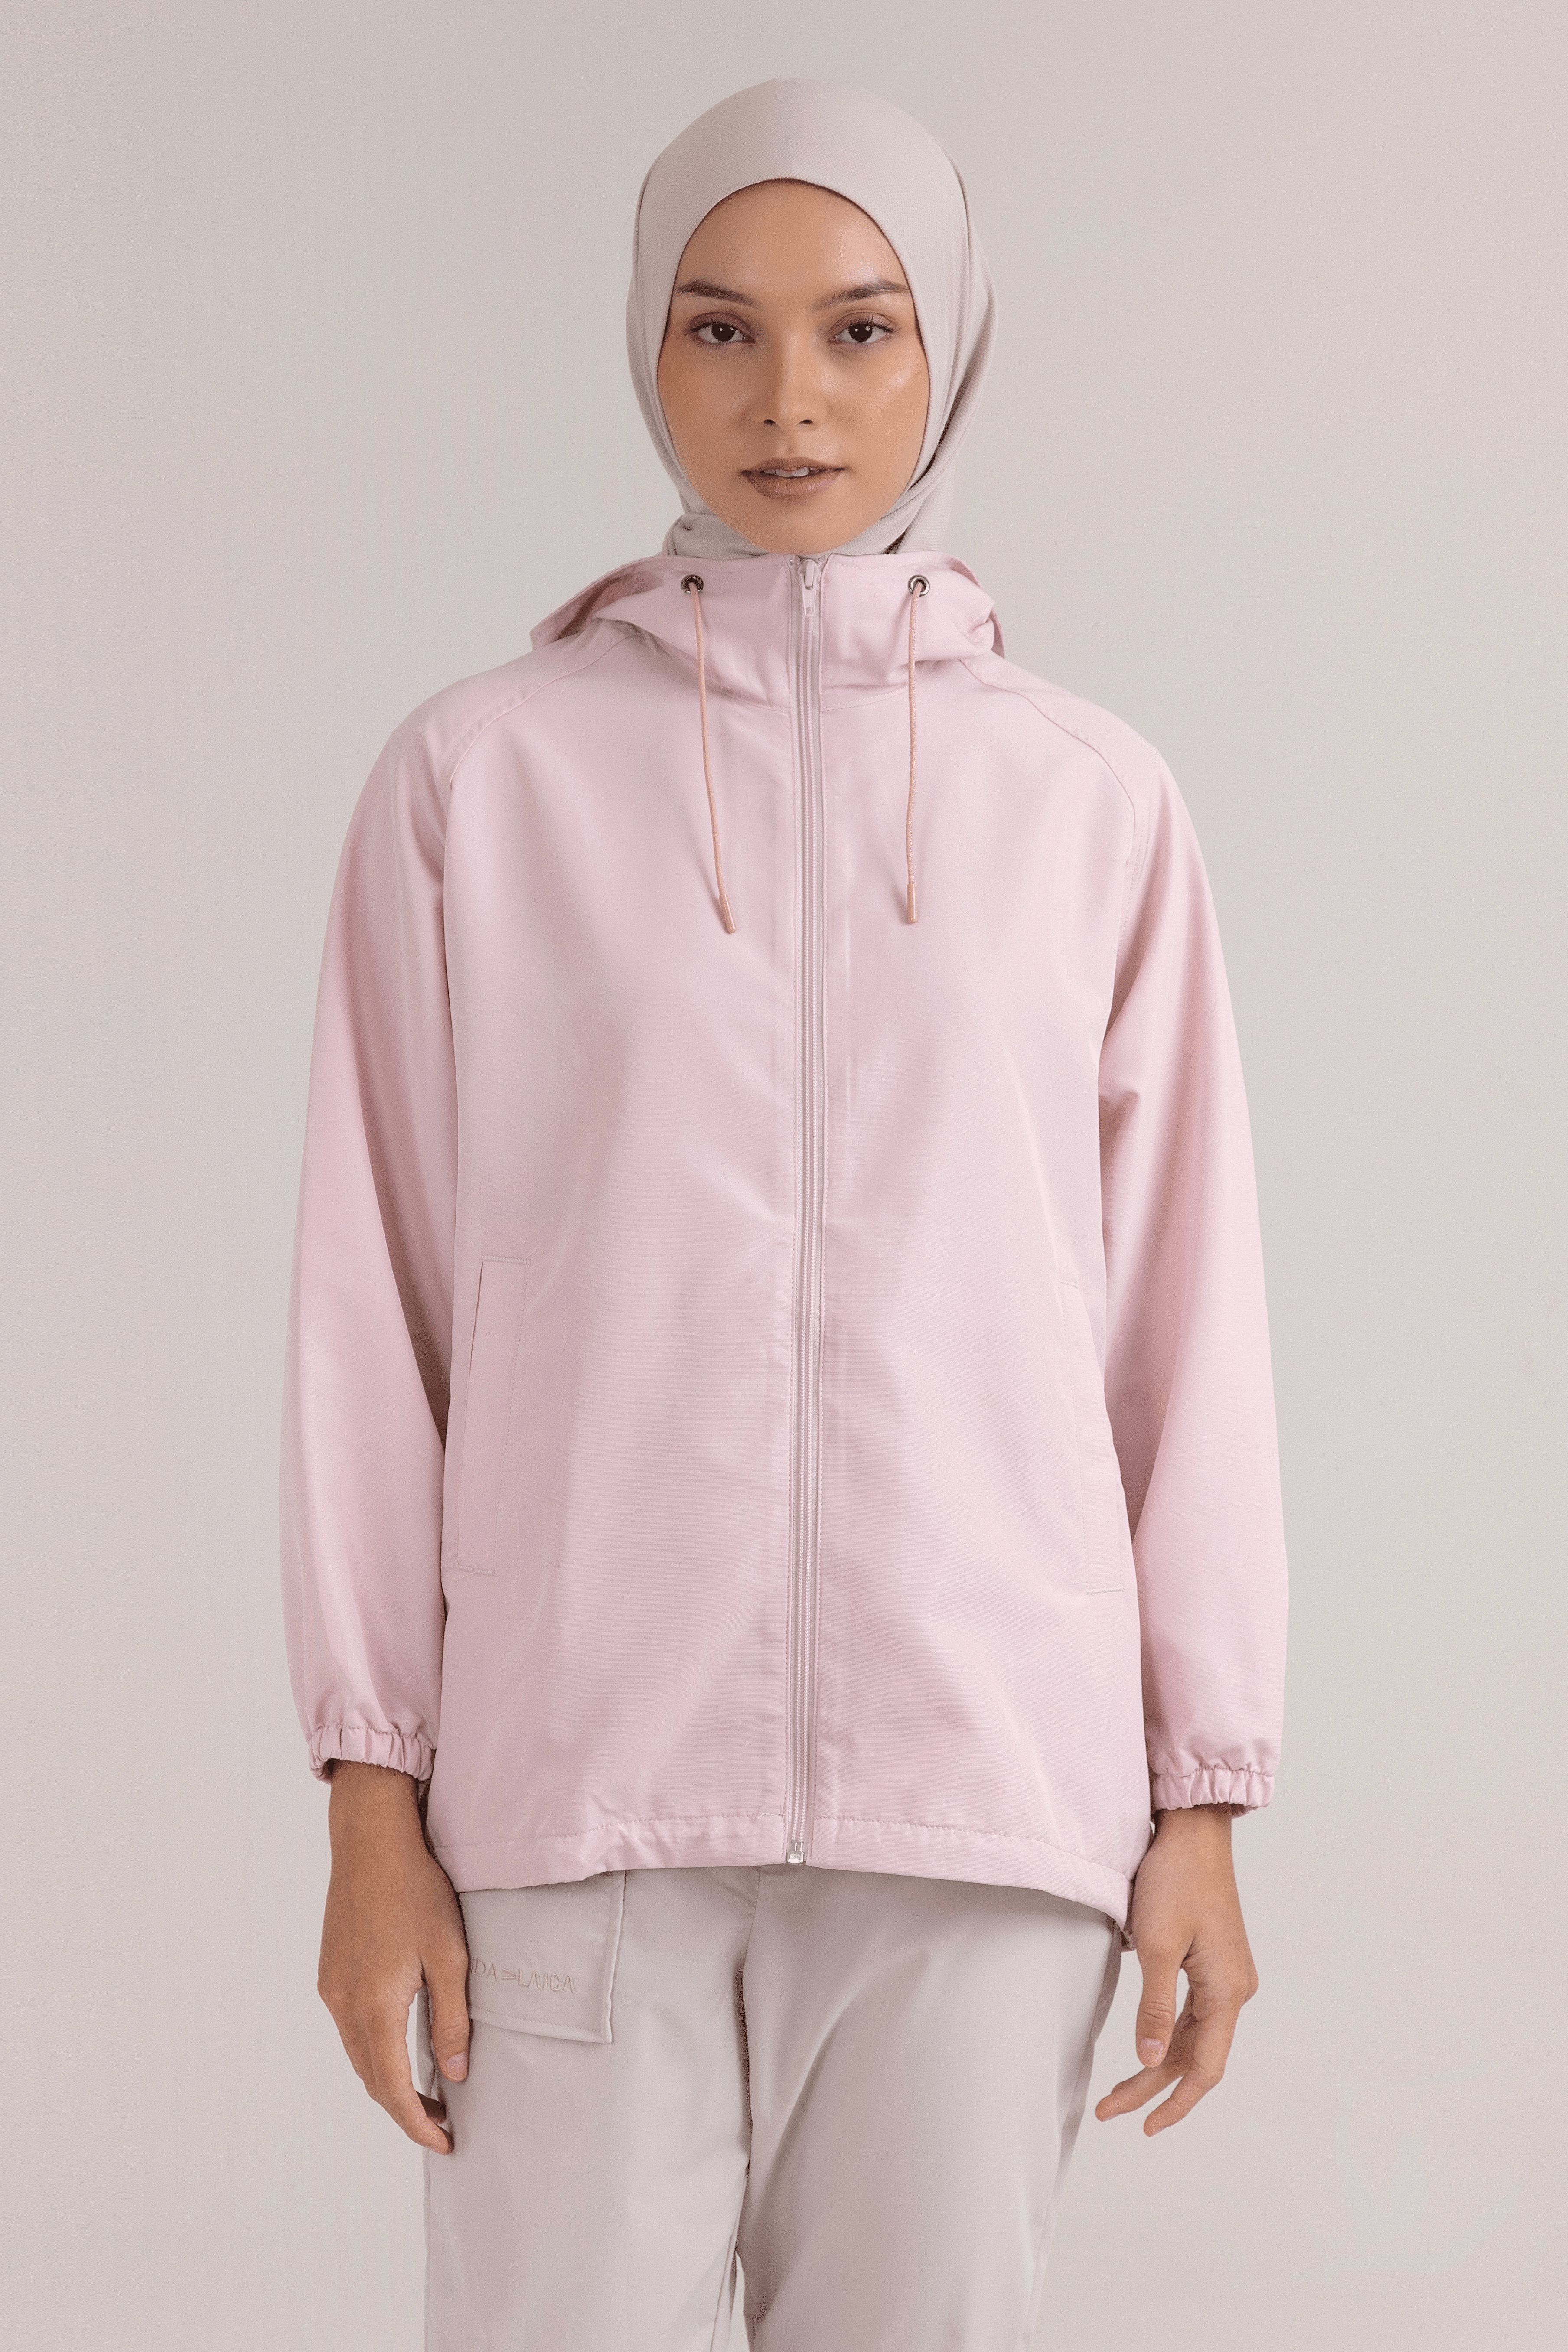 LAICA x RiaMiranda Printed Jacket - Salmon Pink